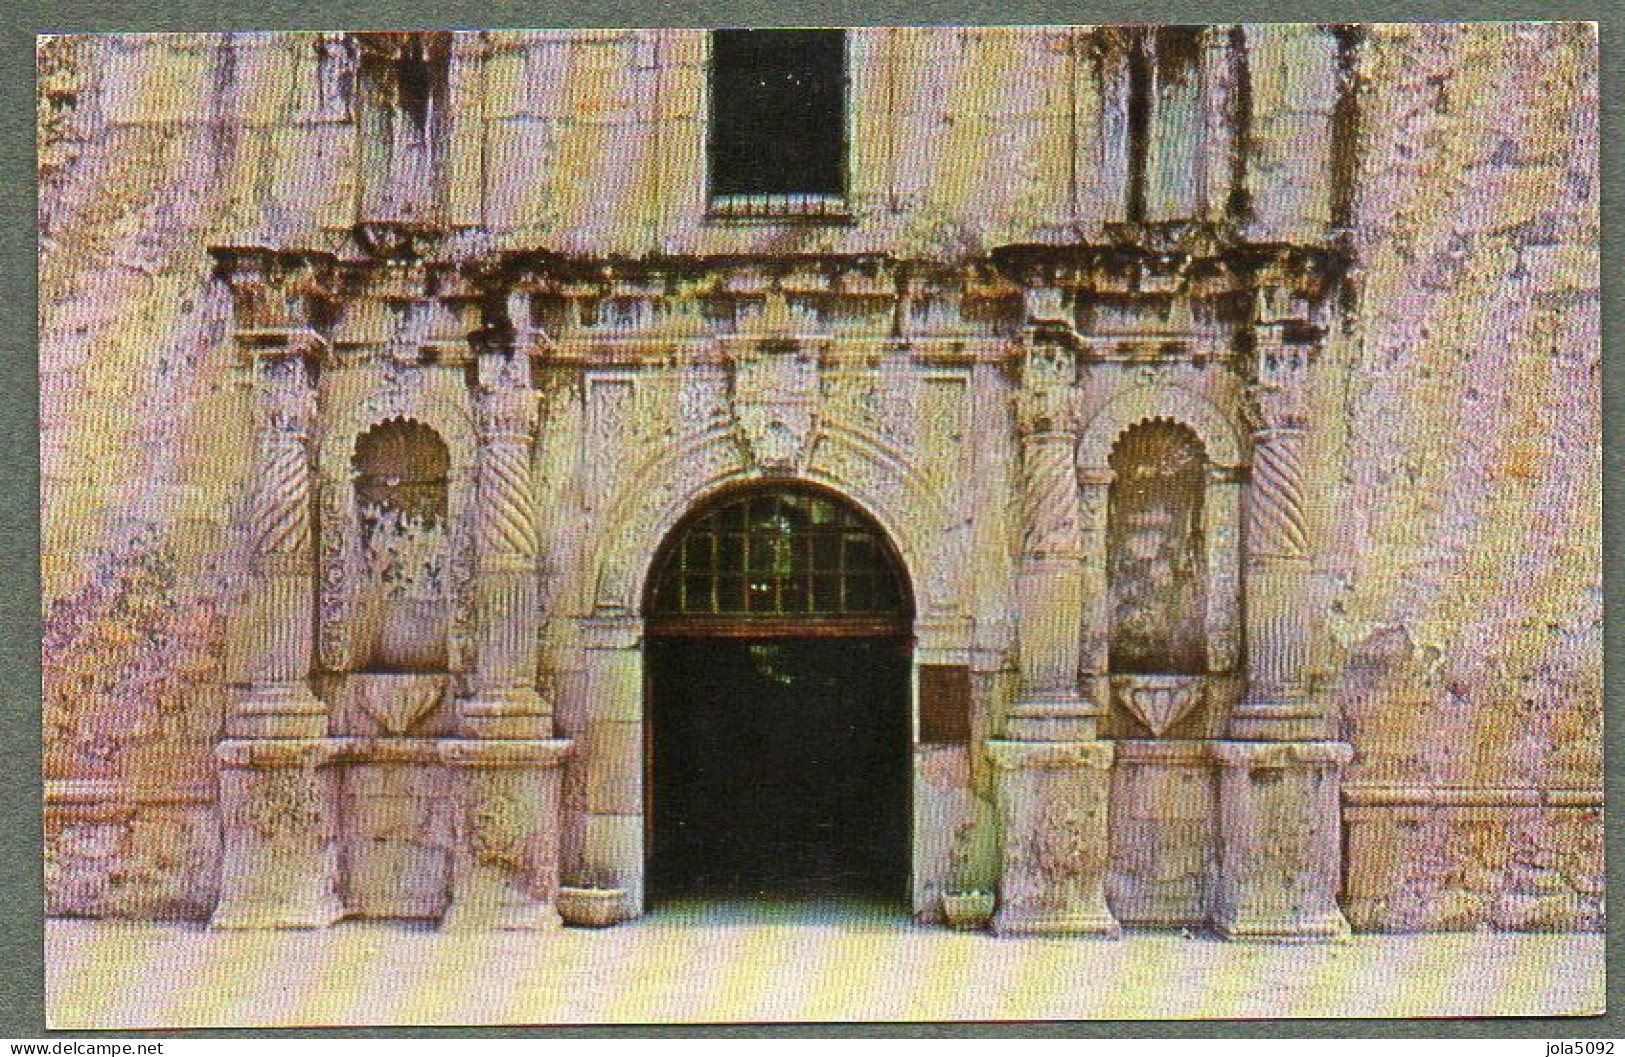 USA - SAN ANTONIO - The Alamo Doorway - San Antonio